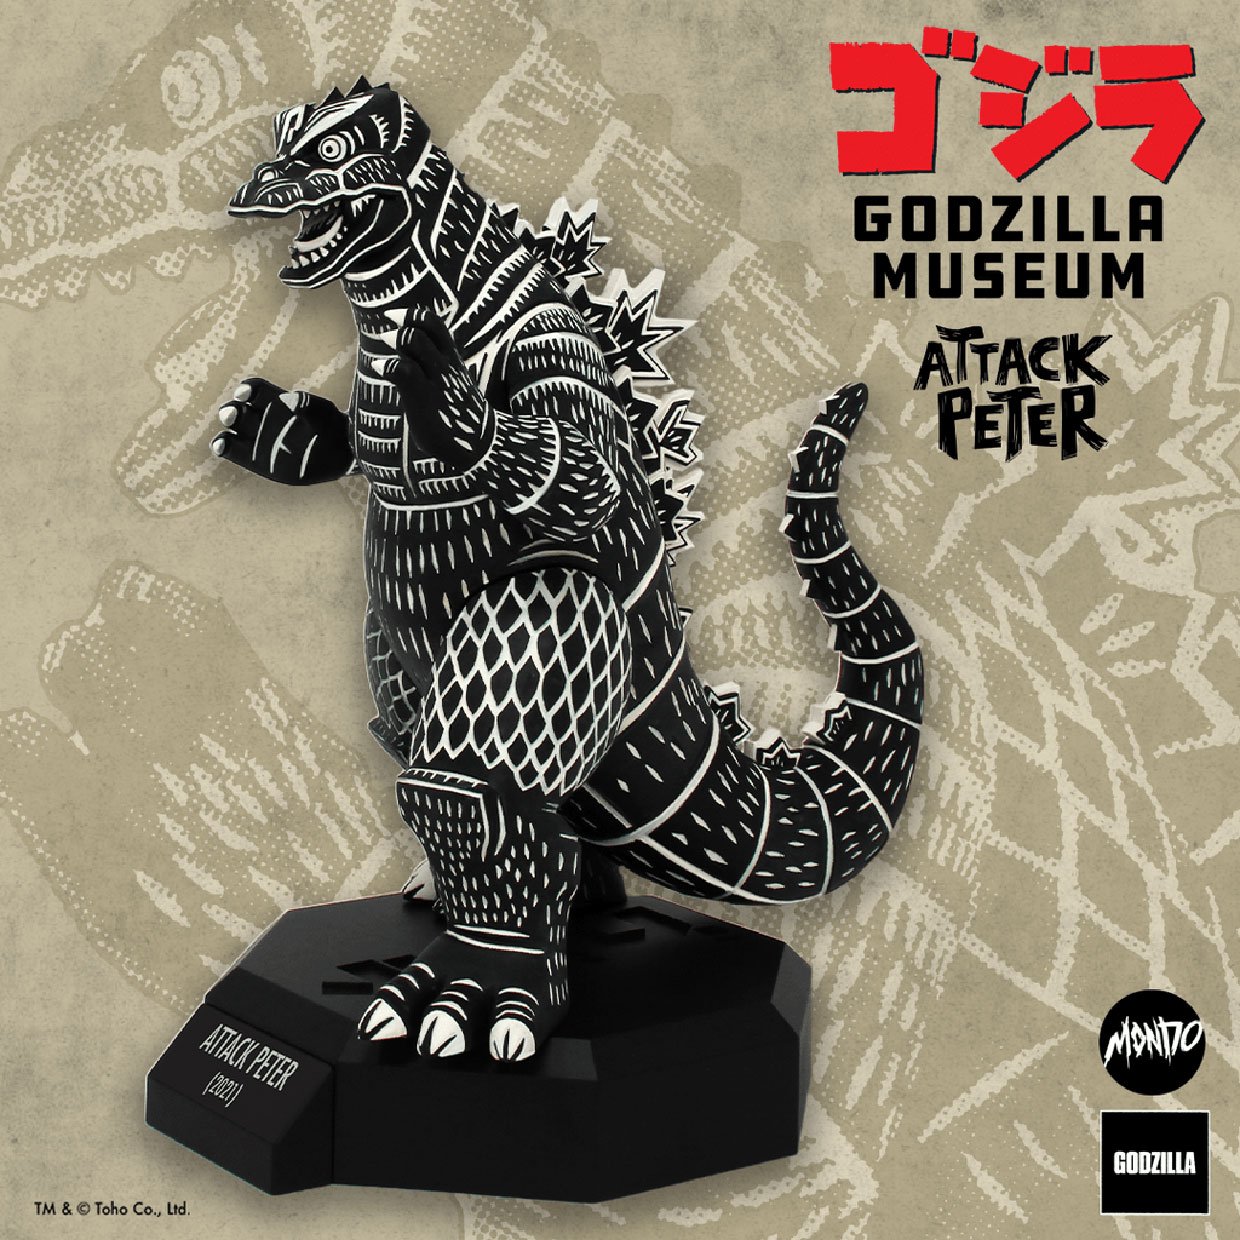 Godzilla Museum x Attack Peter Kaiju Statue